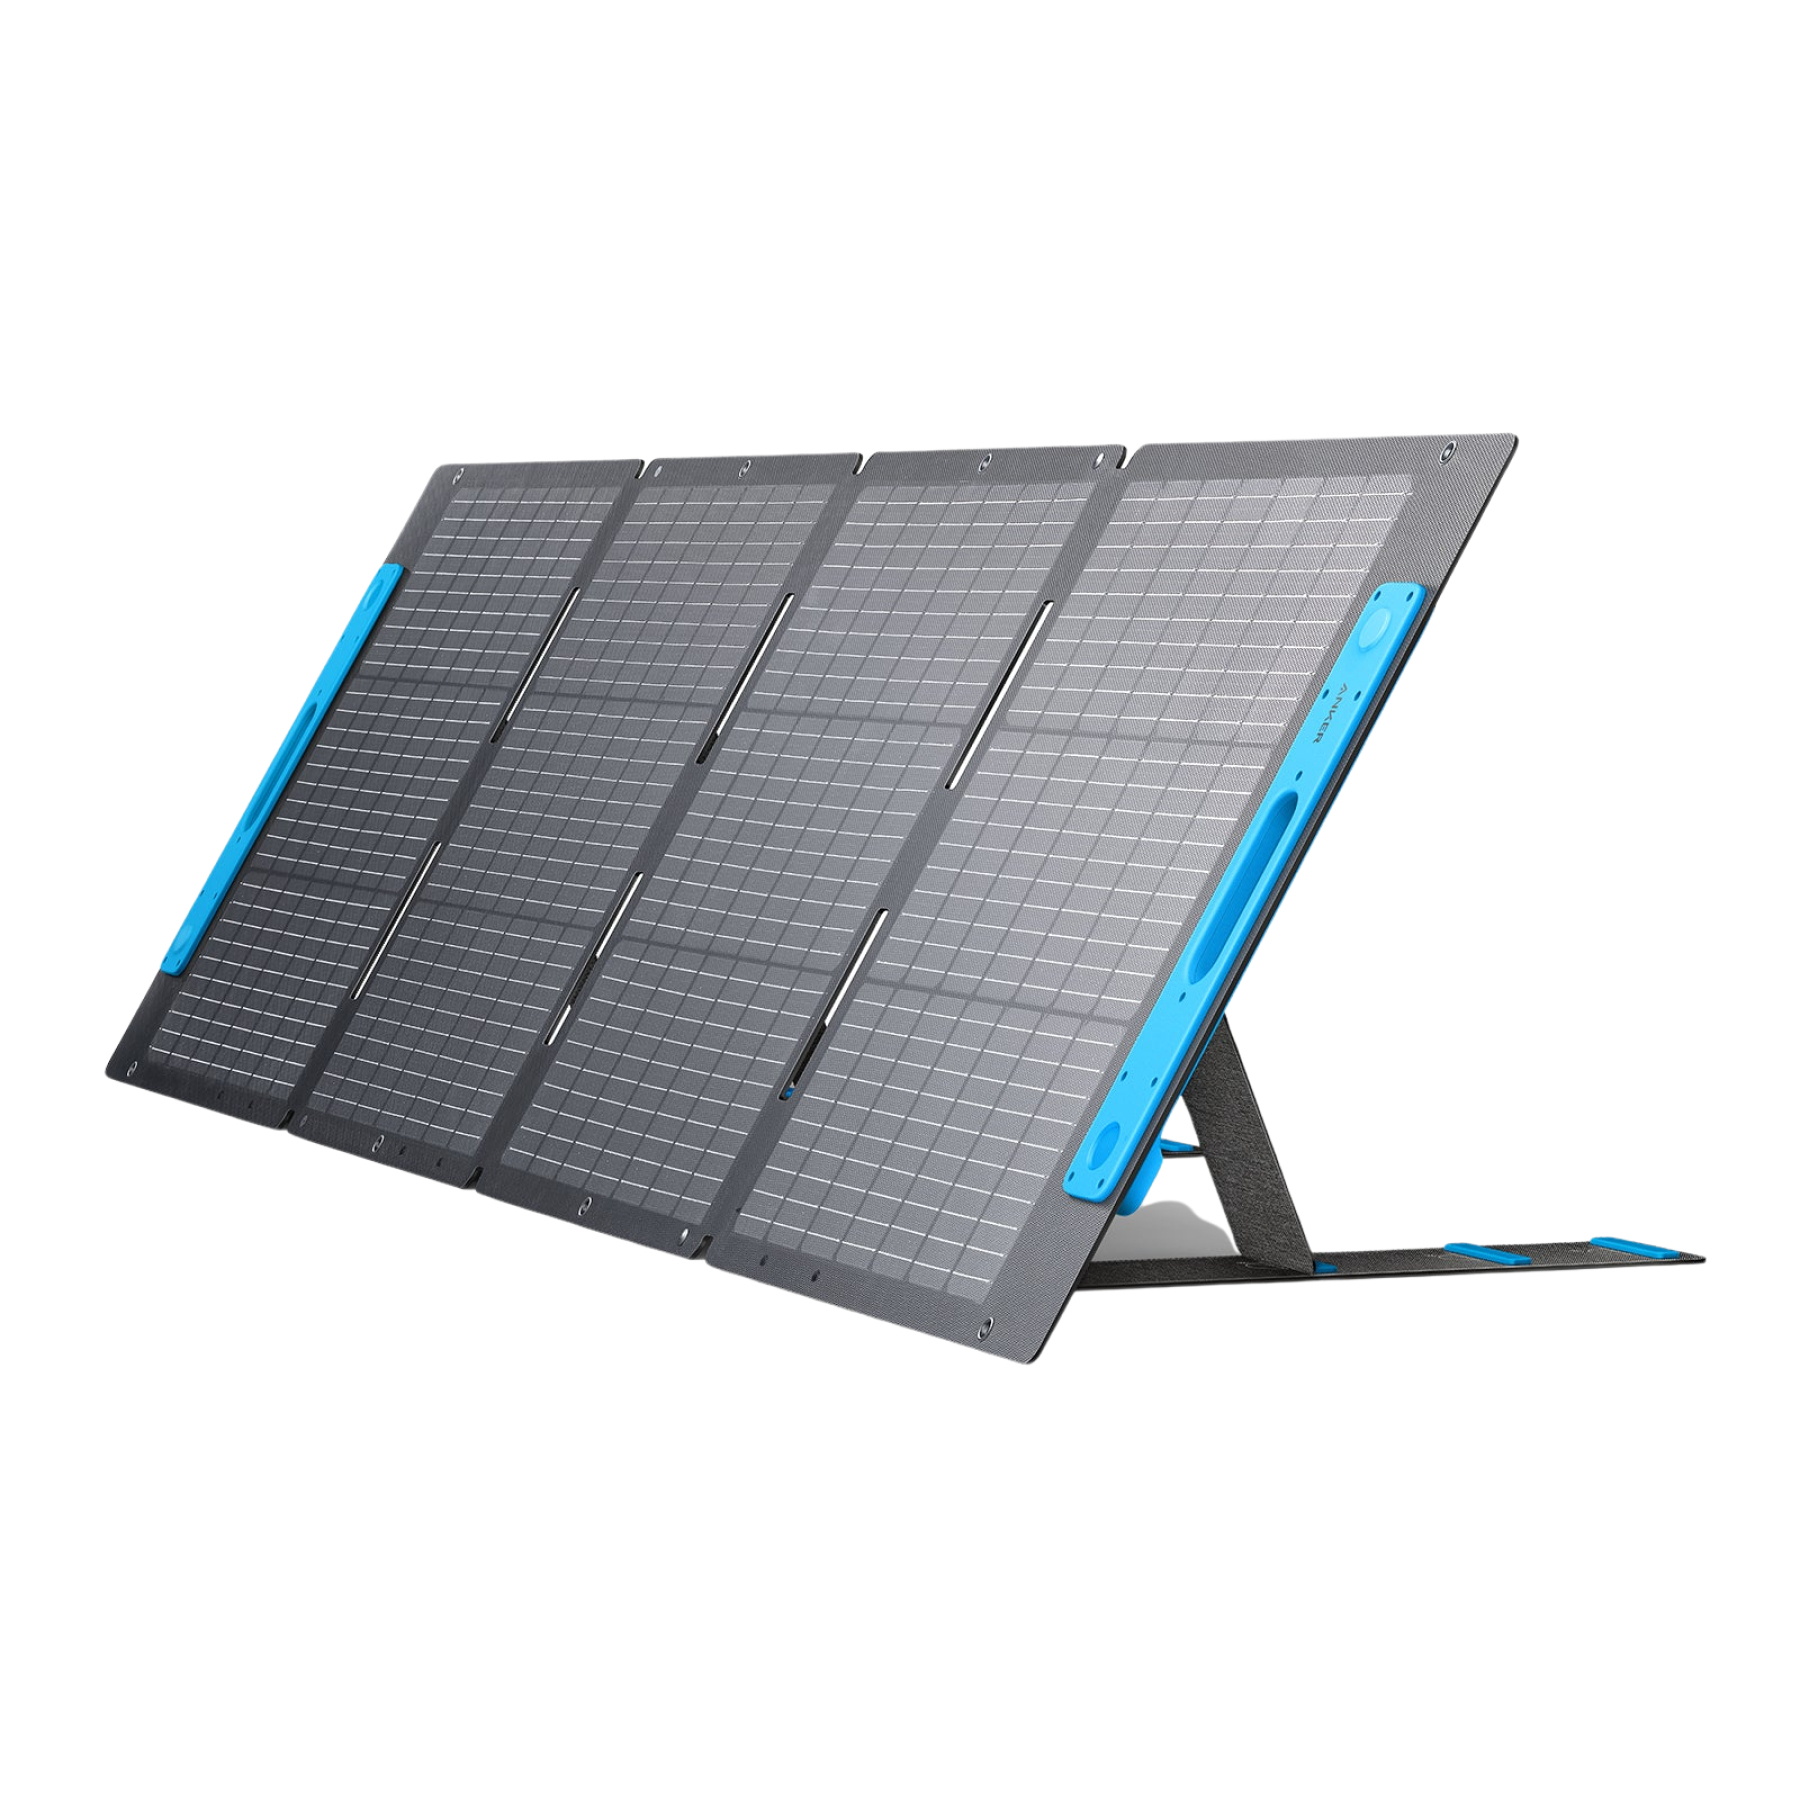 Anker 531 Solar Panel (200w) A24320a1 - WC01